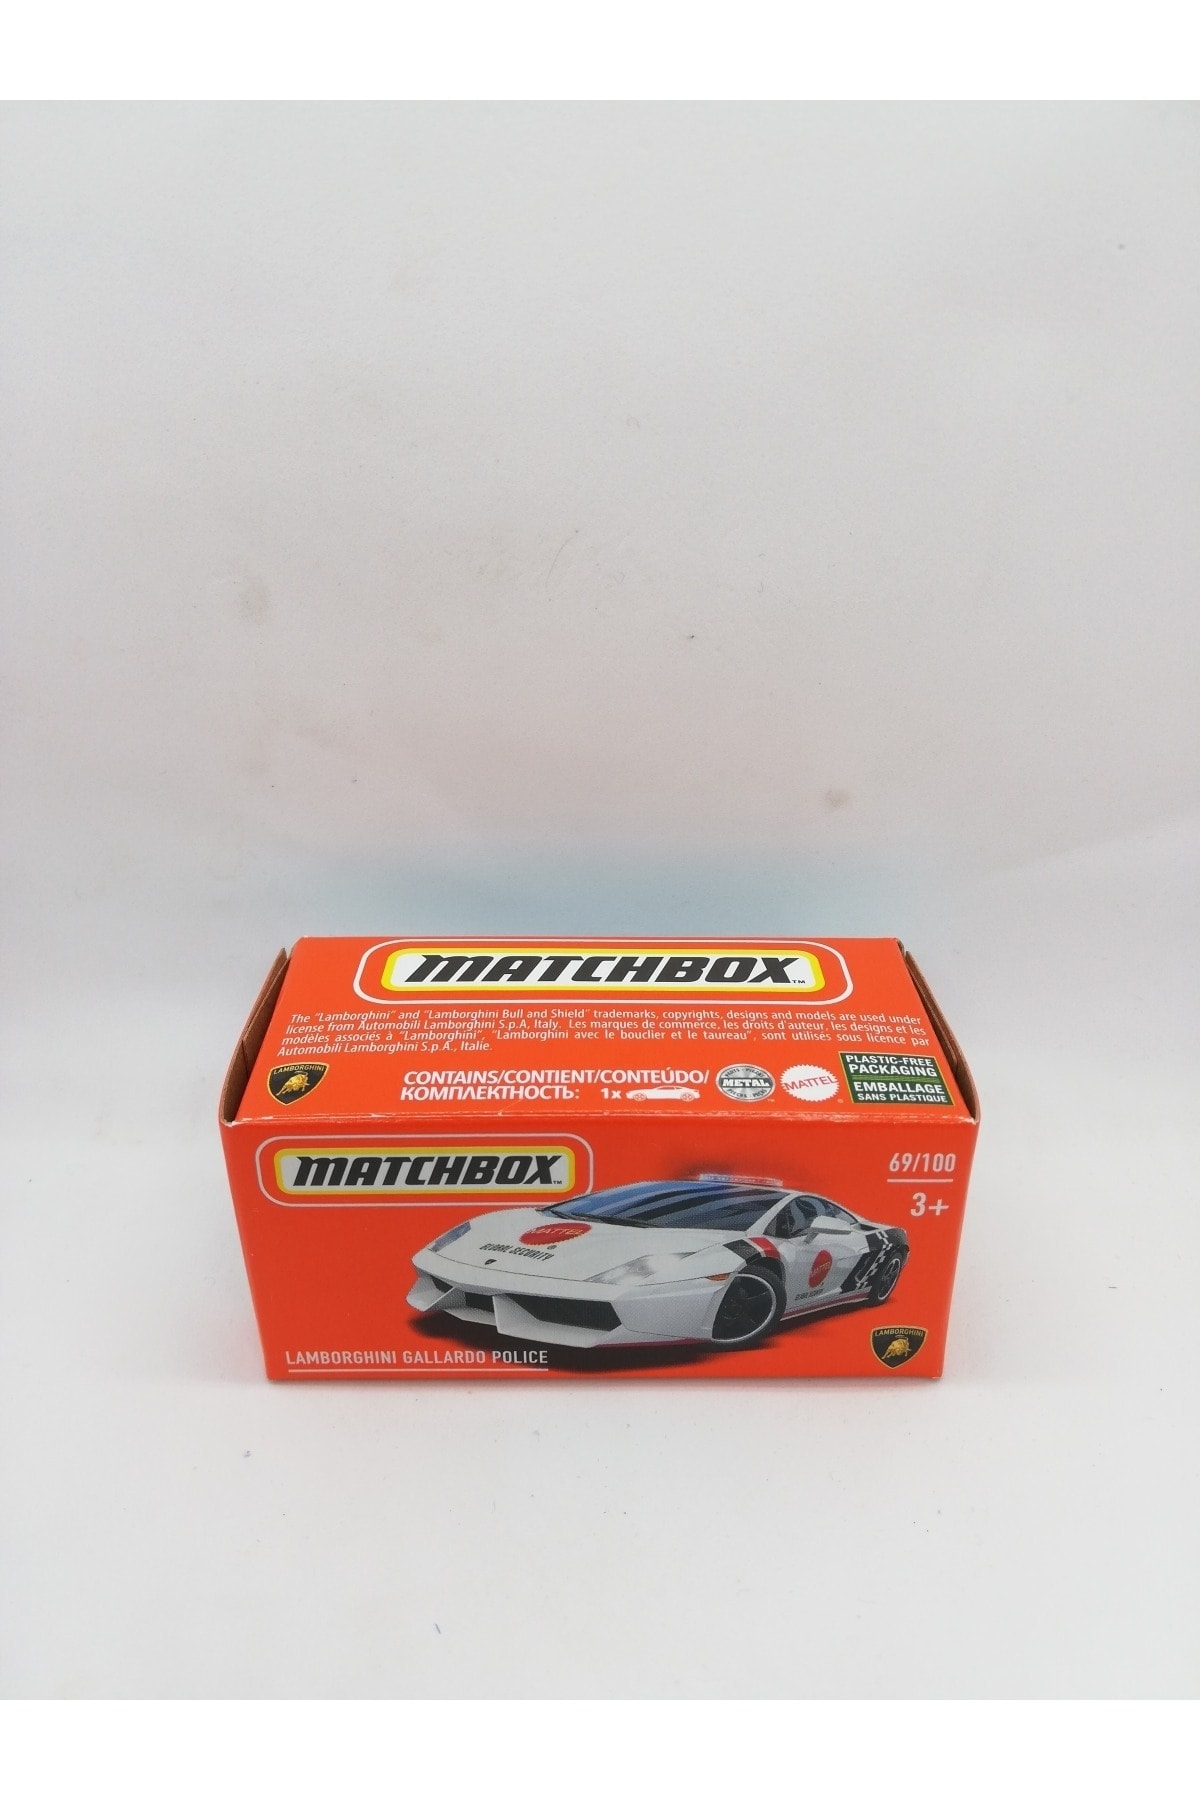 Matchbox Lamborghini Gallardo Police 1:64